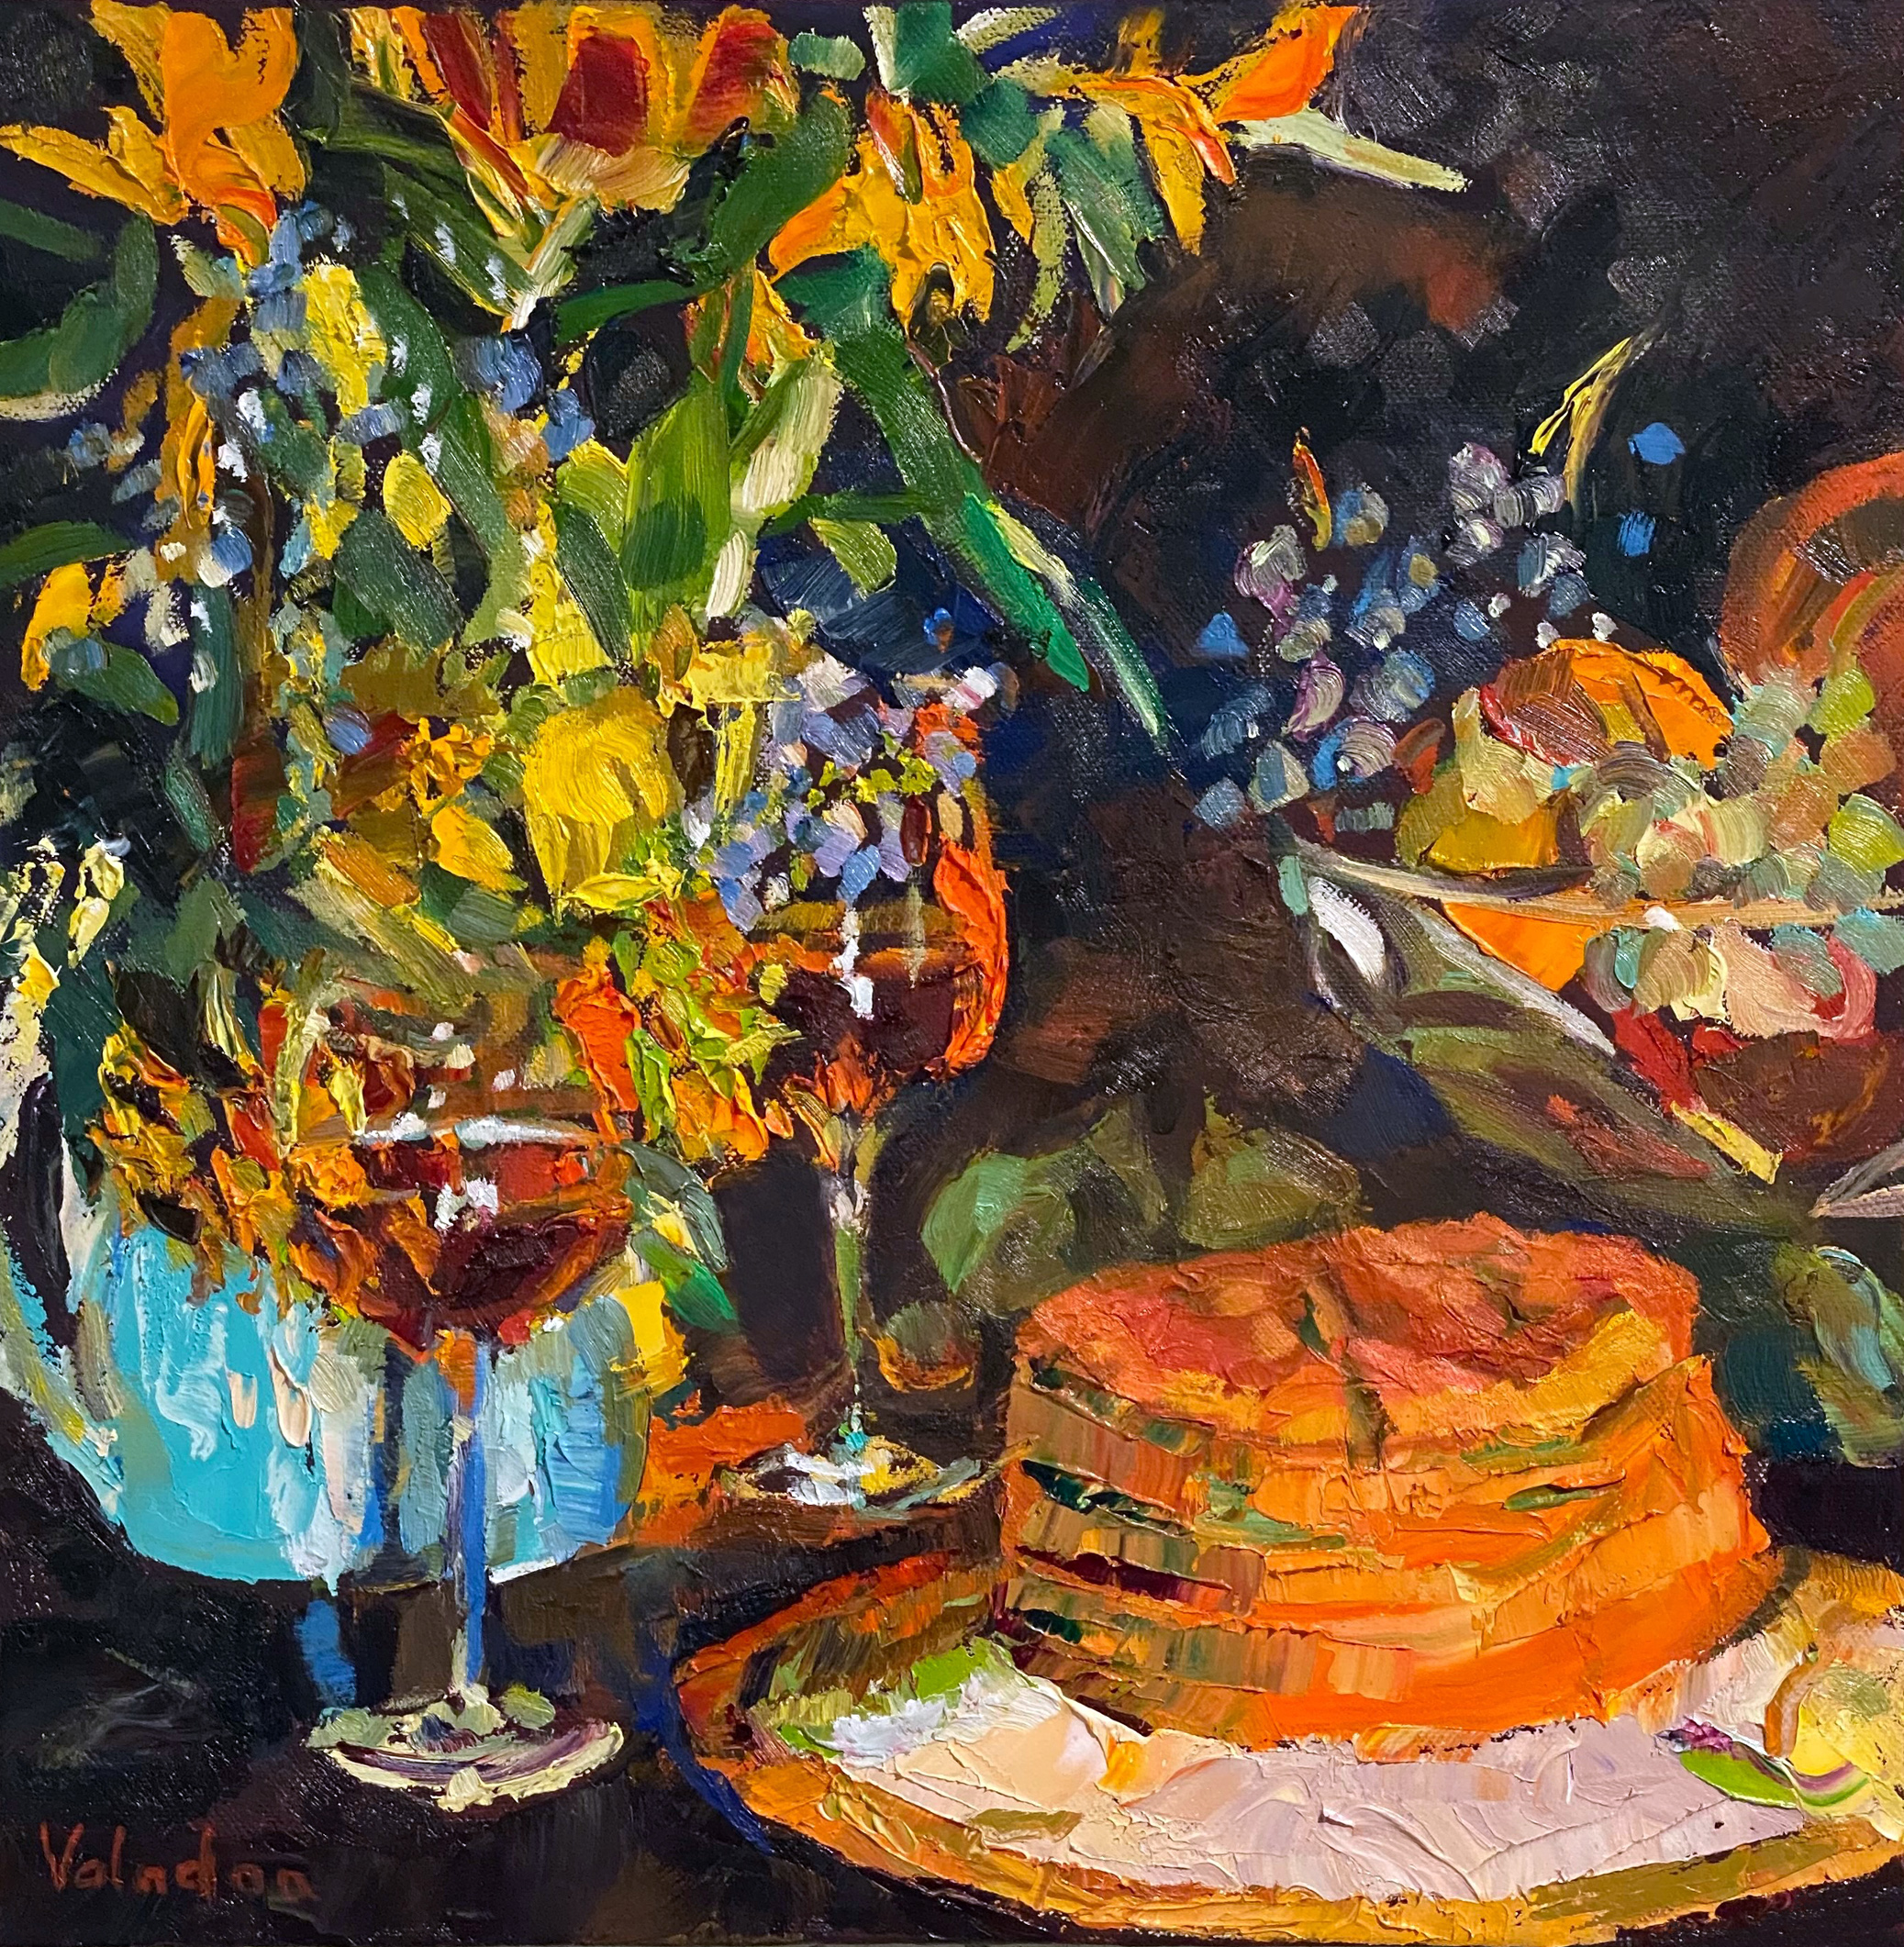 Valadon_The Orange Hat_oil on canvas_40 x 40cm_master